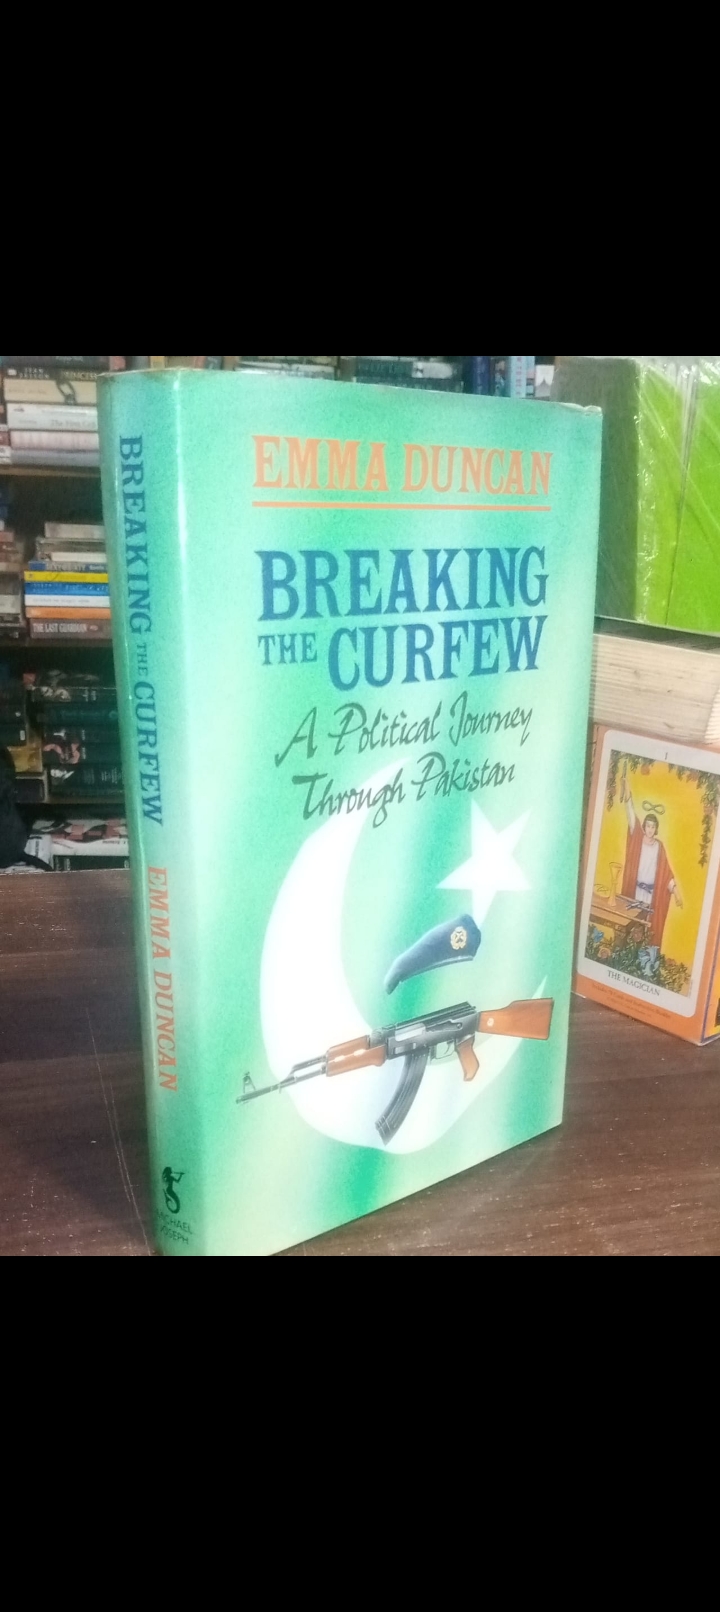 breaking the curfew a political journey through pakistan by emma duncan. 1st edition original hardco